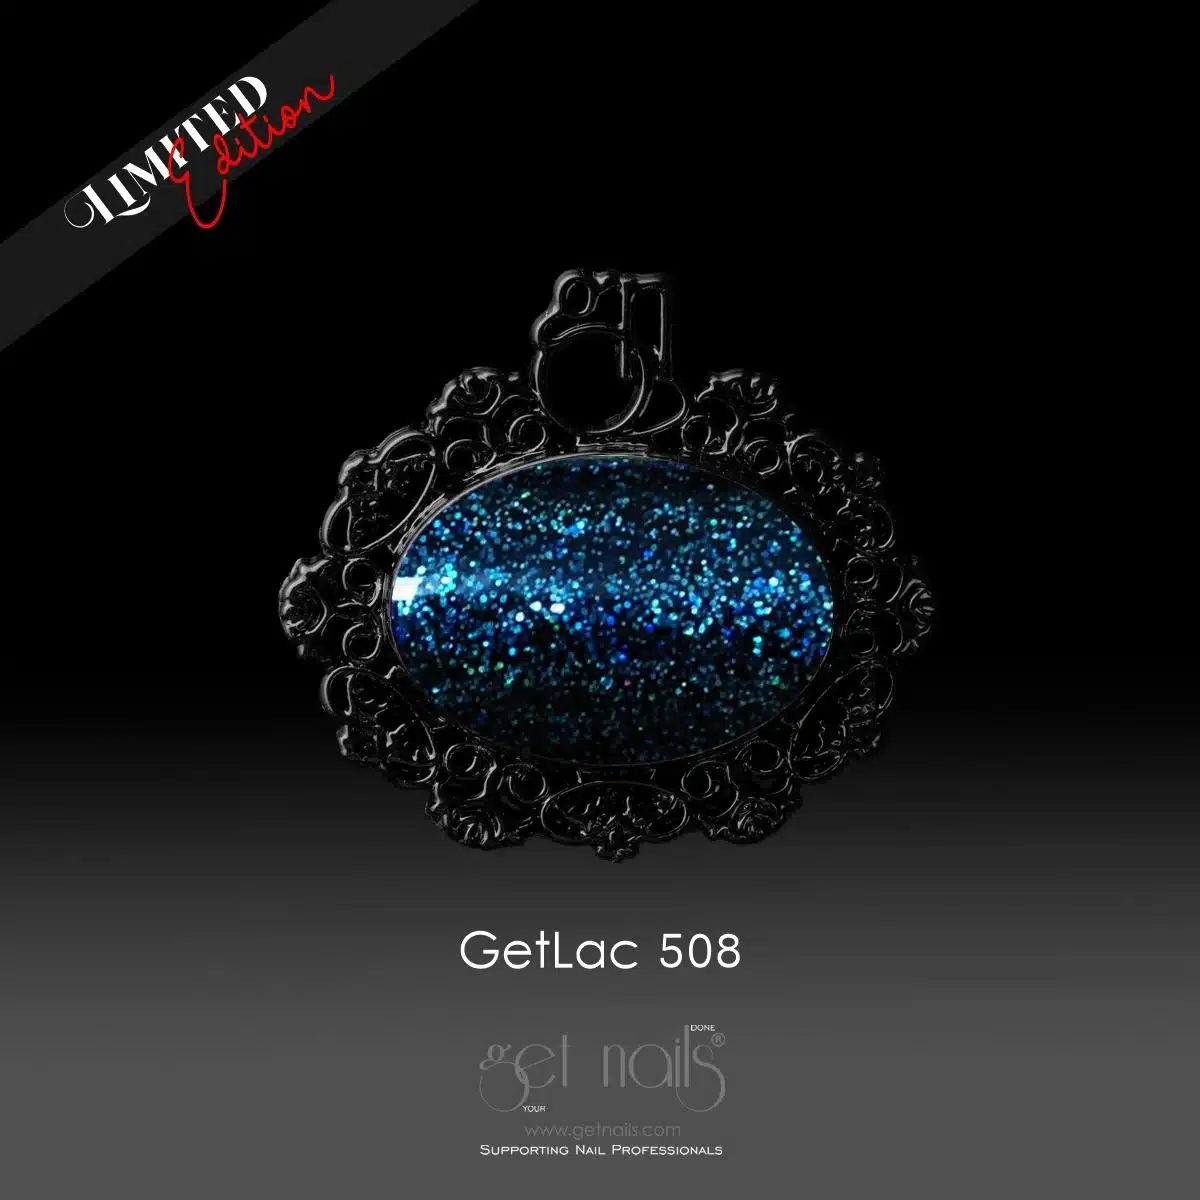 Get Nails Austria - GetLac 508 15 g